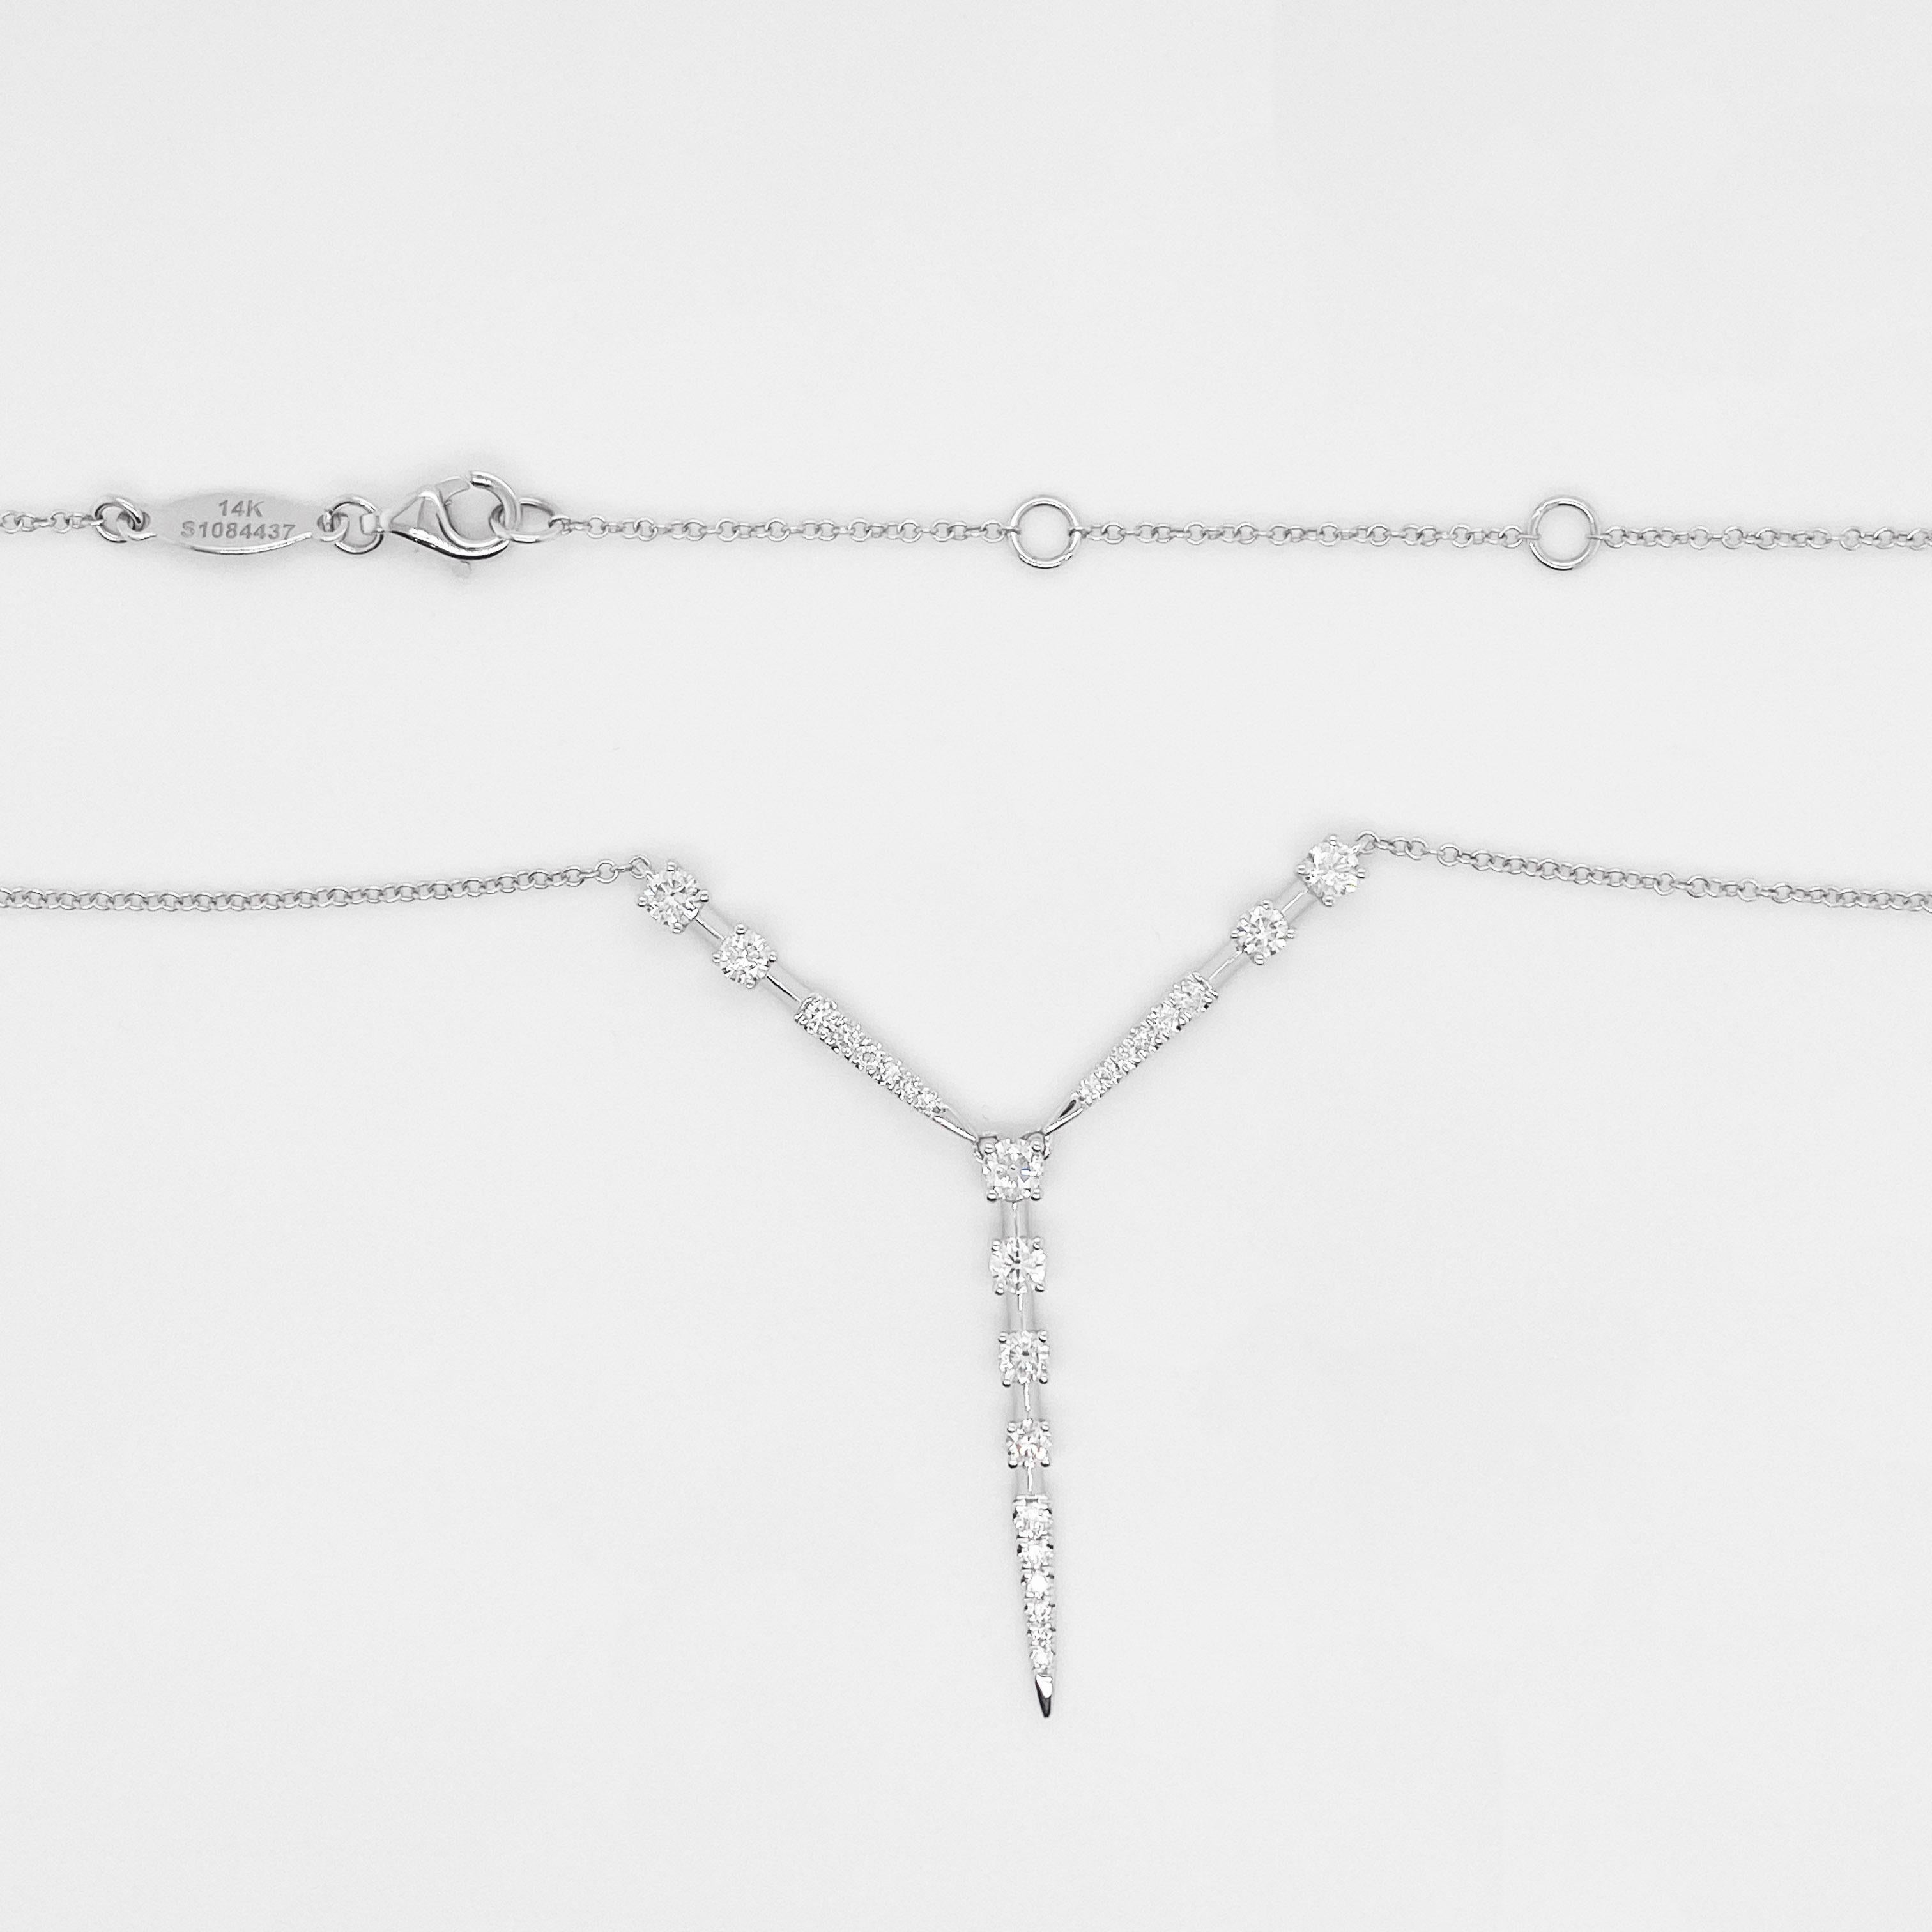 Contemporary Diamond Station Necklace, 14k White Gold, Y Station Necklace, Fashion, #Neckmess For Sale